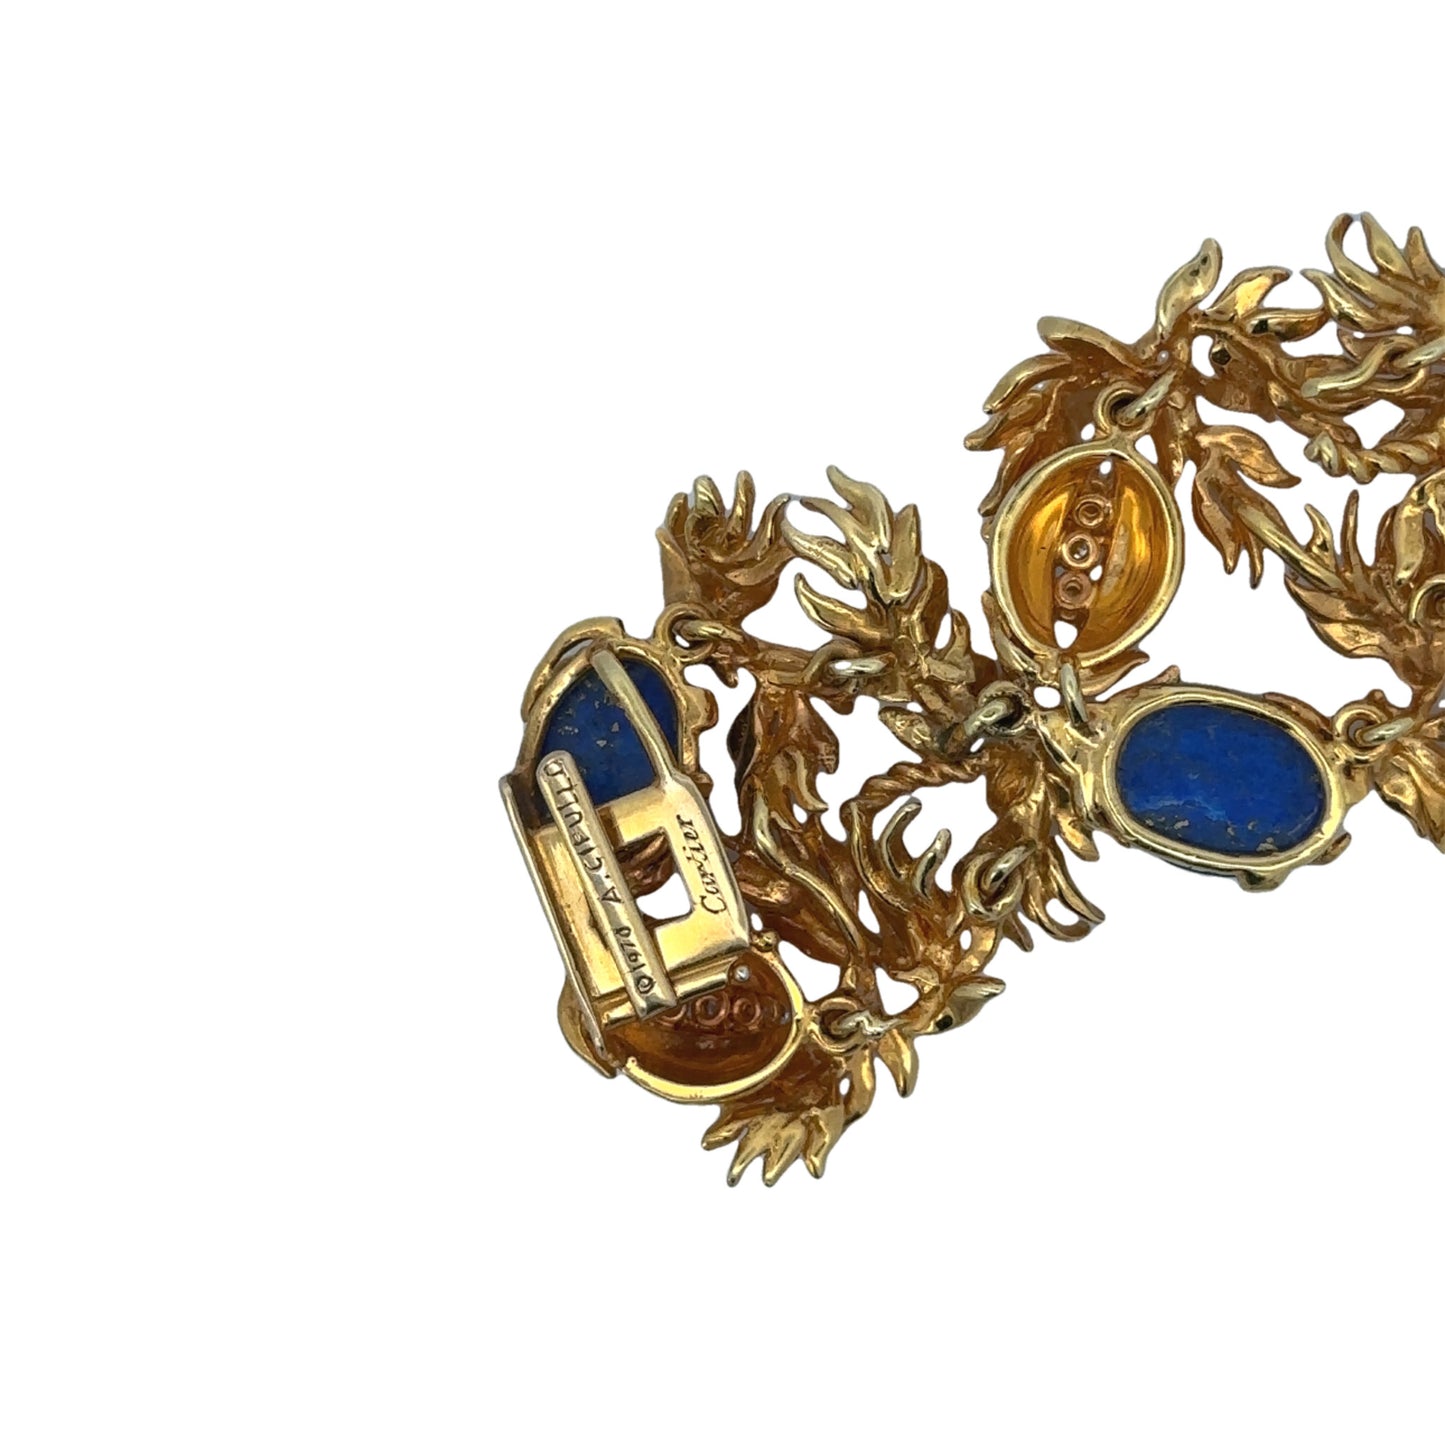 Cartier Aldo Cipullo 1970s 18KT Yellow Gold Lapis Lazuli & Diamond Bracelet close-up of clasp and signature